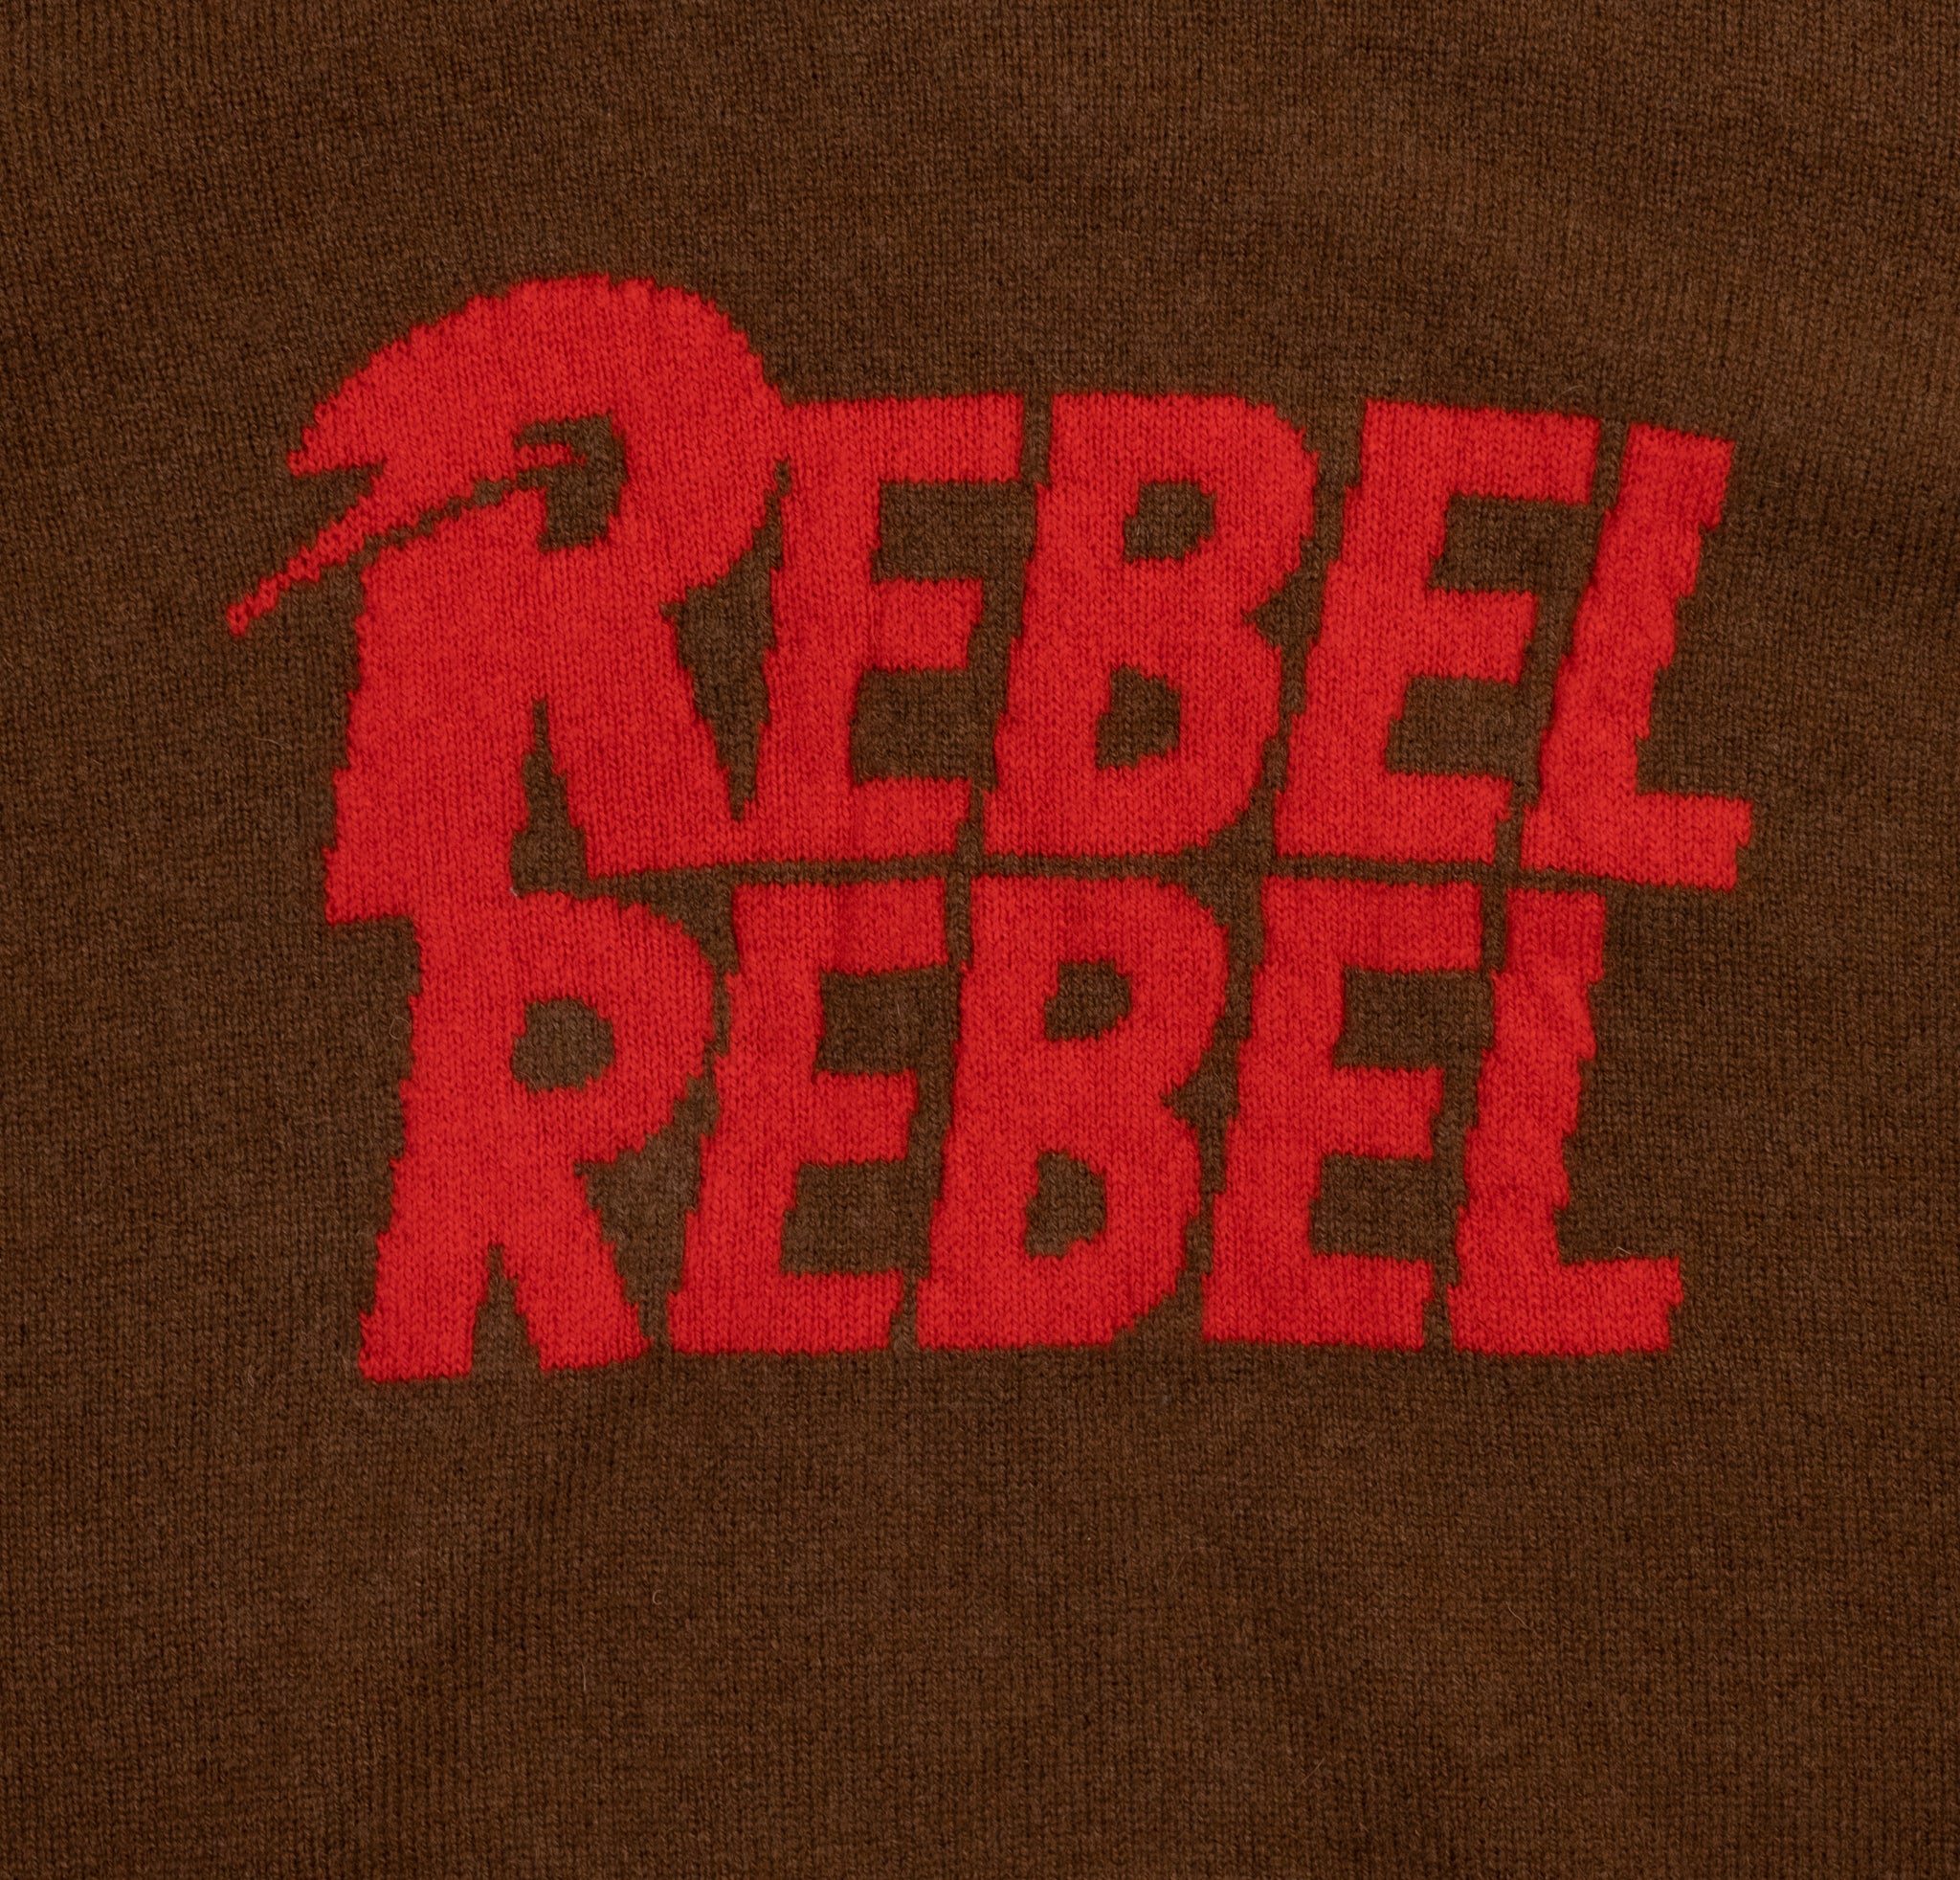 David Bowie | Rebel Rebel | Men's